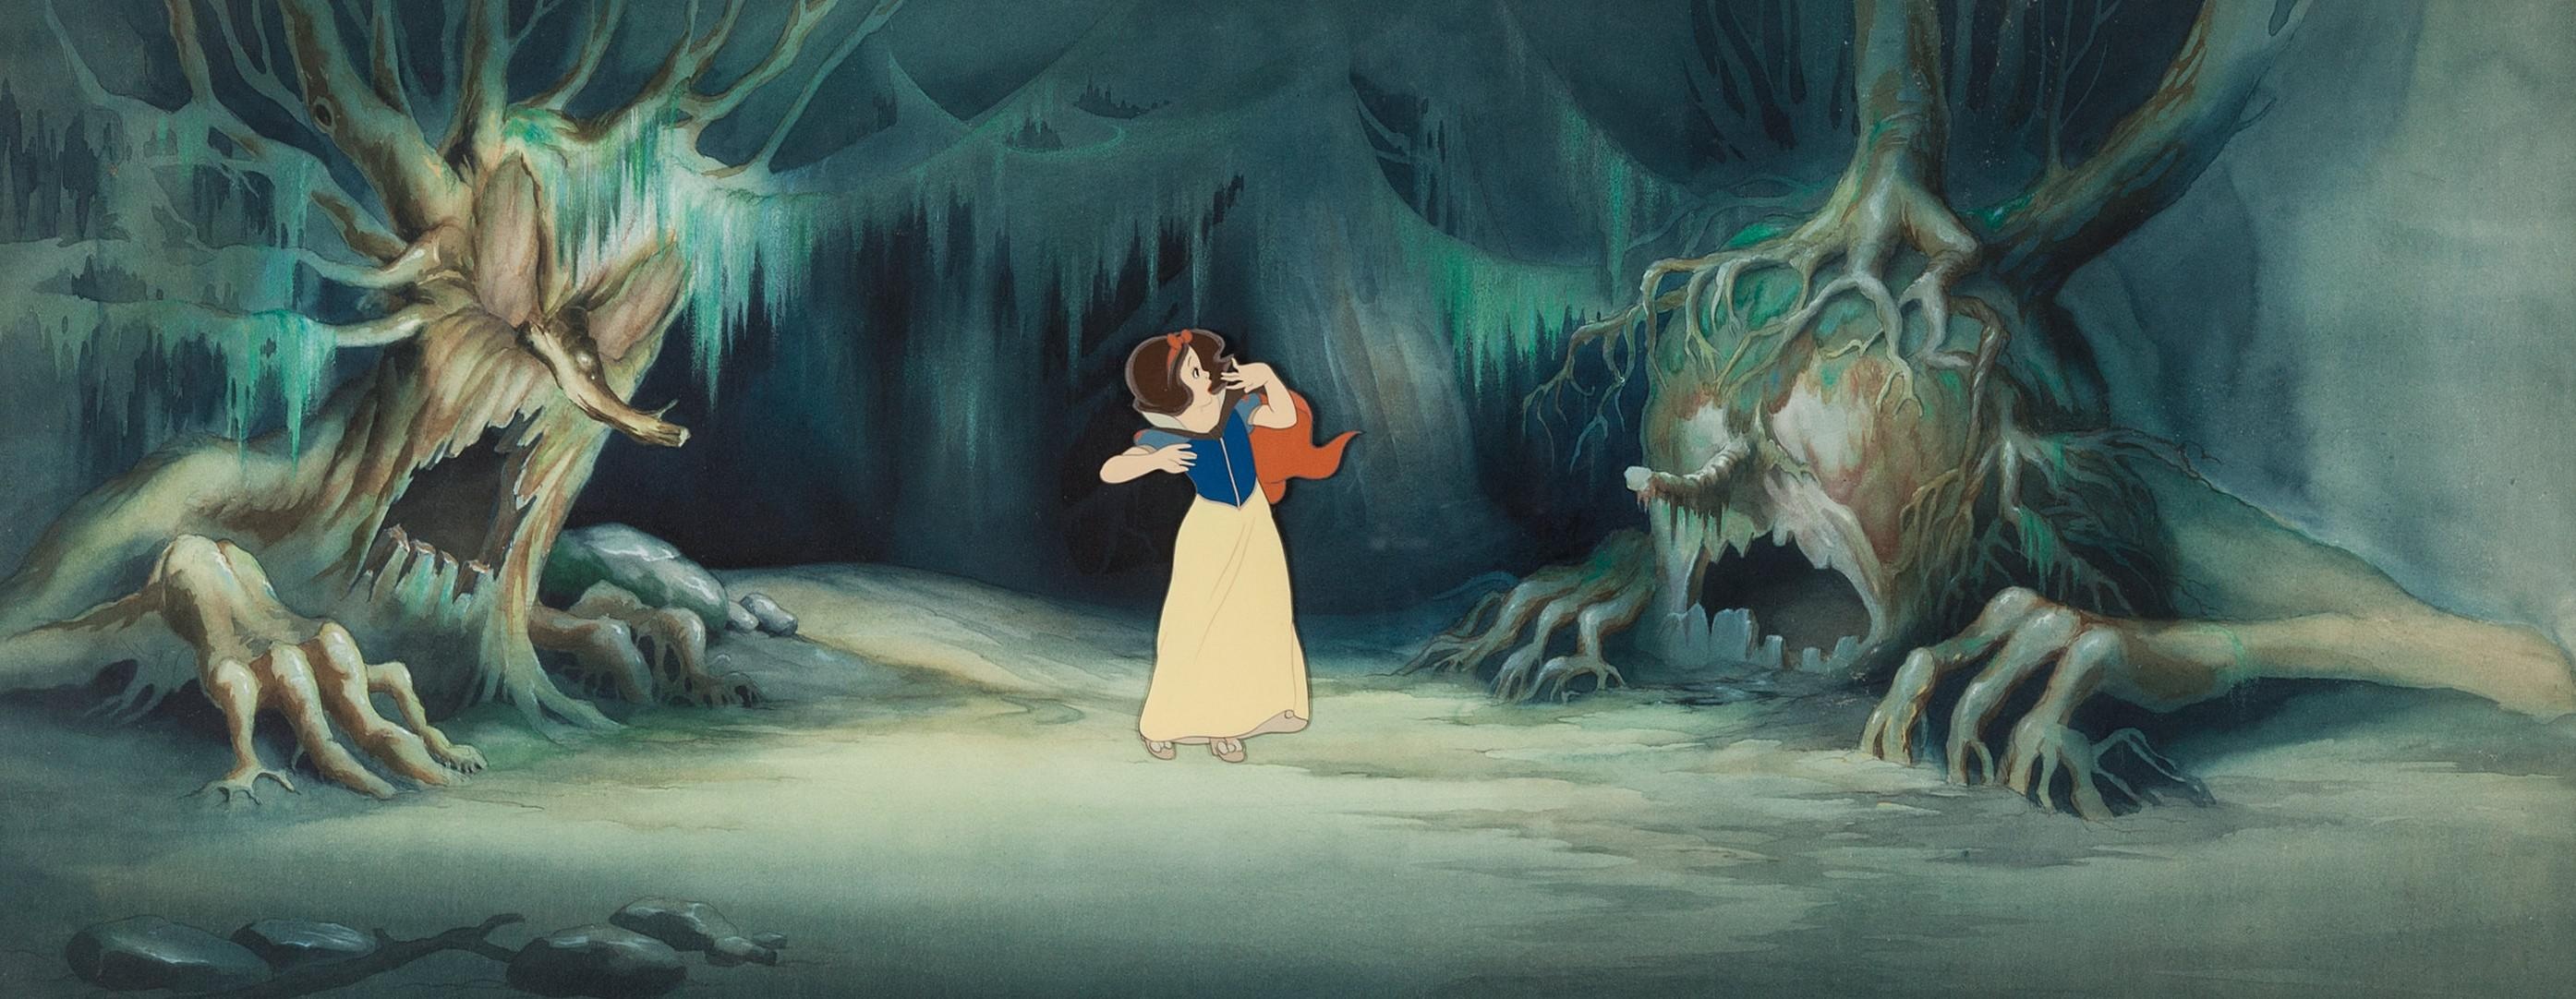 Snow White, Animation, Snow White and the Seven Dwarfs, Background art, 2790x1090 Dual Screen Desktop